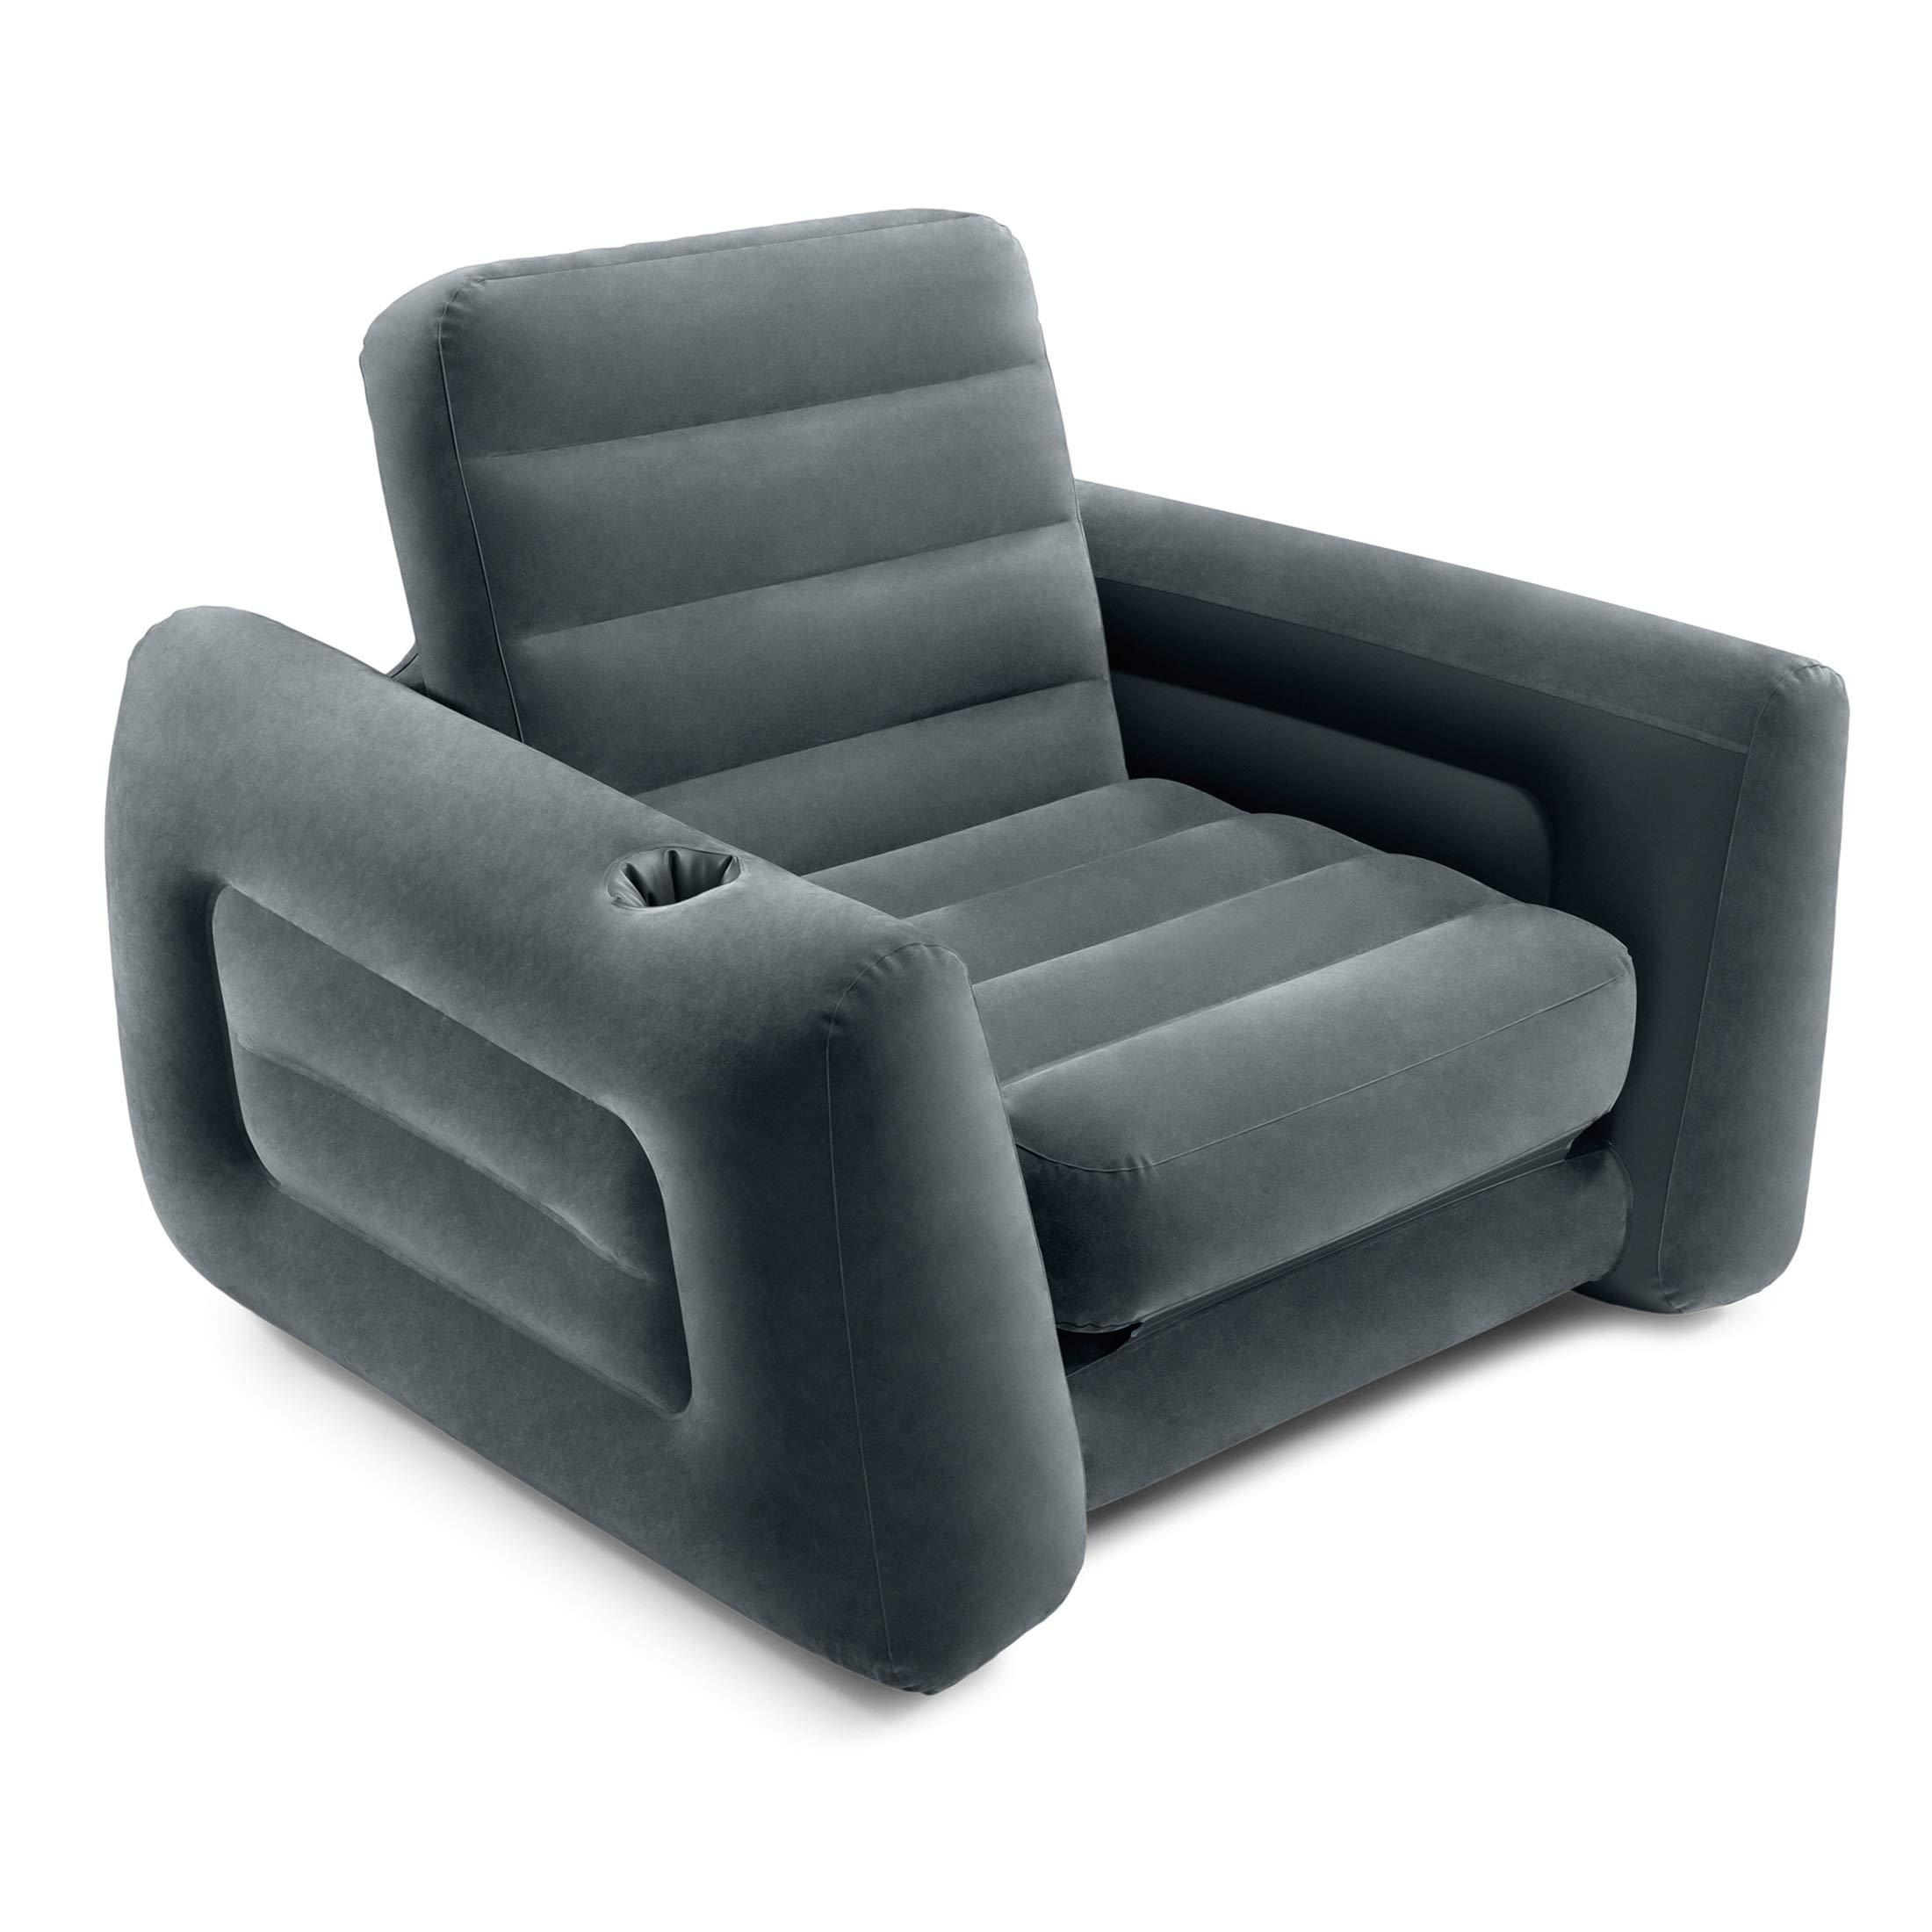 Intex 2 In 1 Inflatable Chair Bed-الكرسي القابل للنفخ متعدد الوظائف